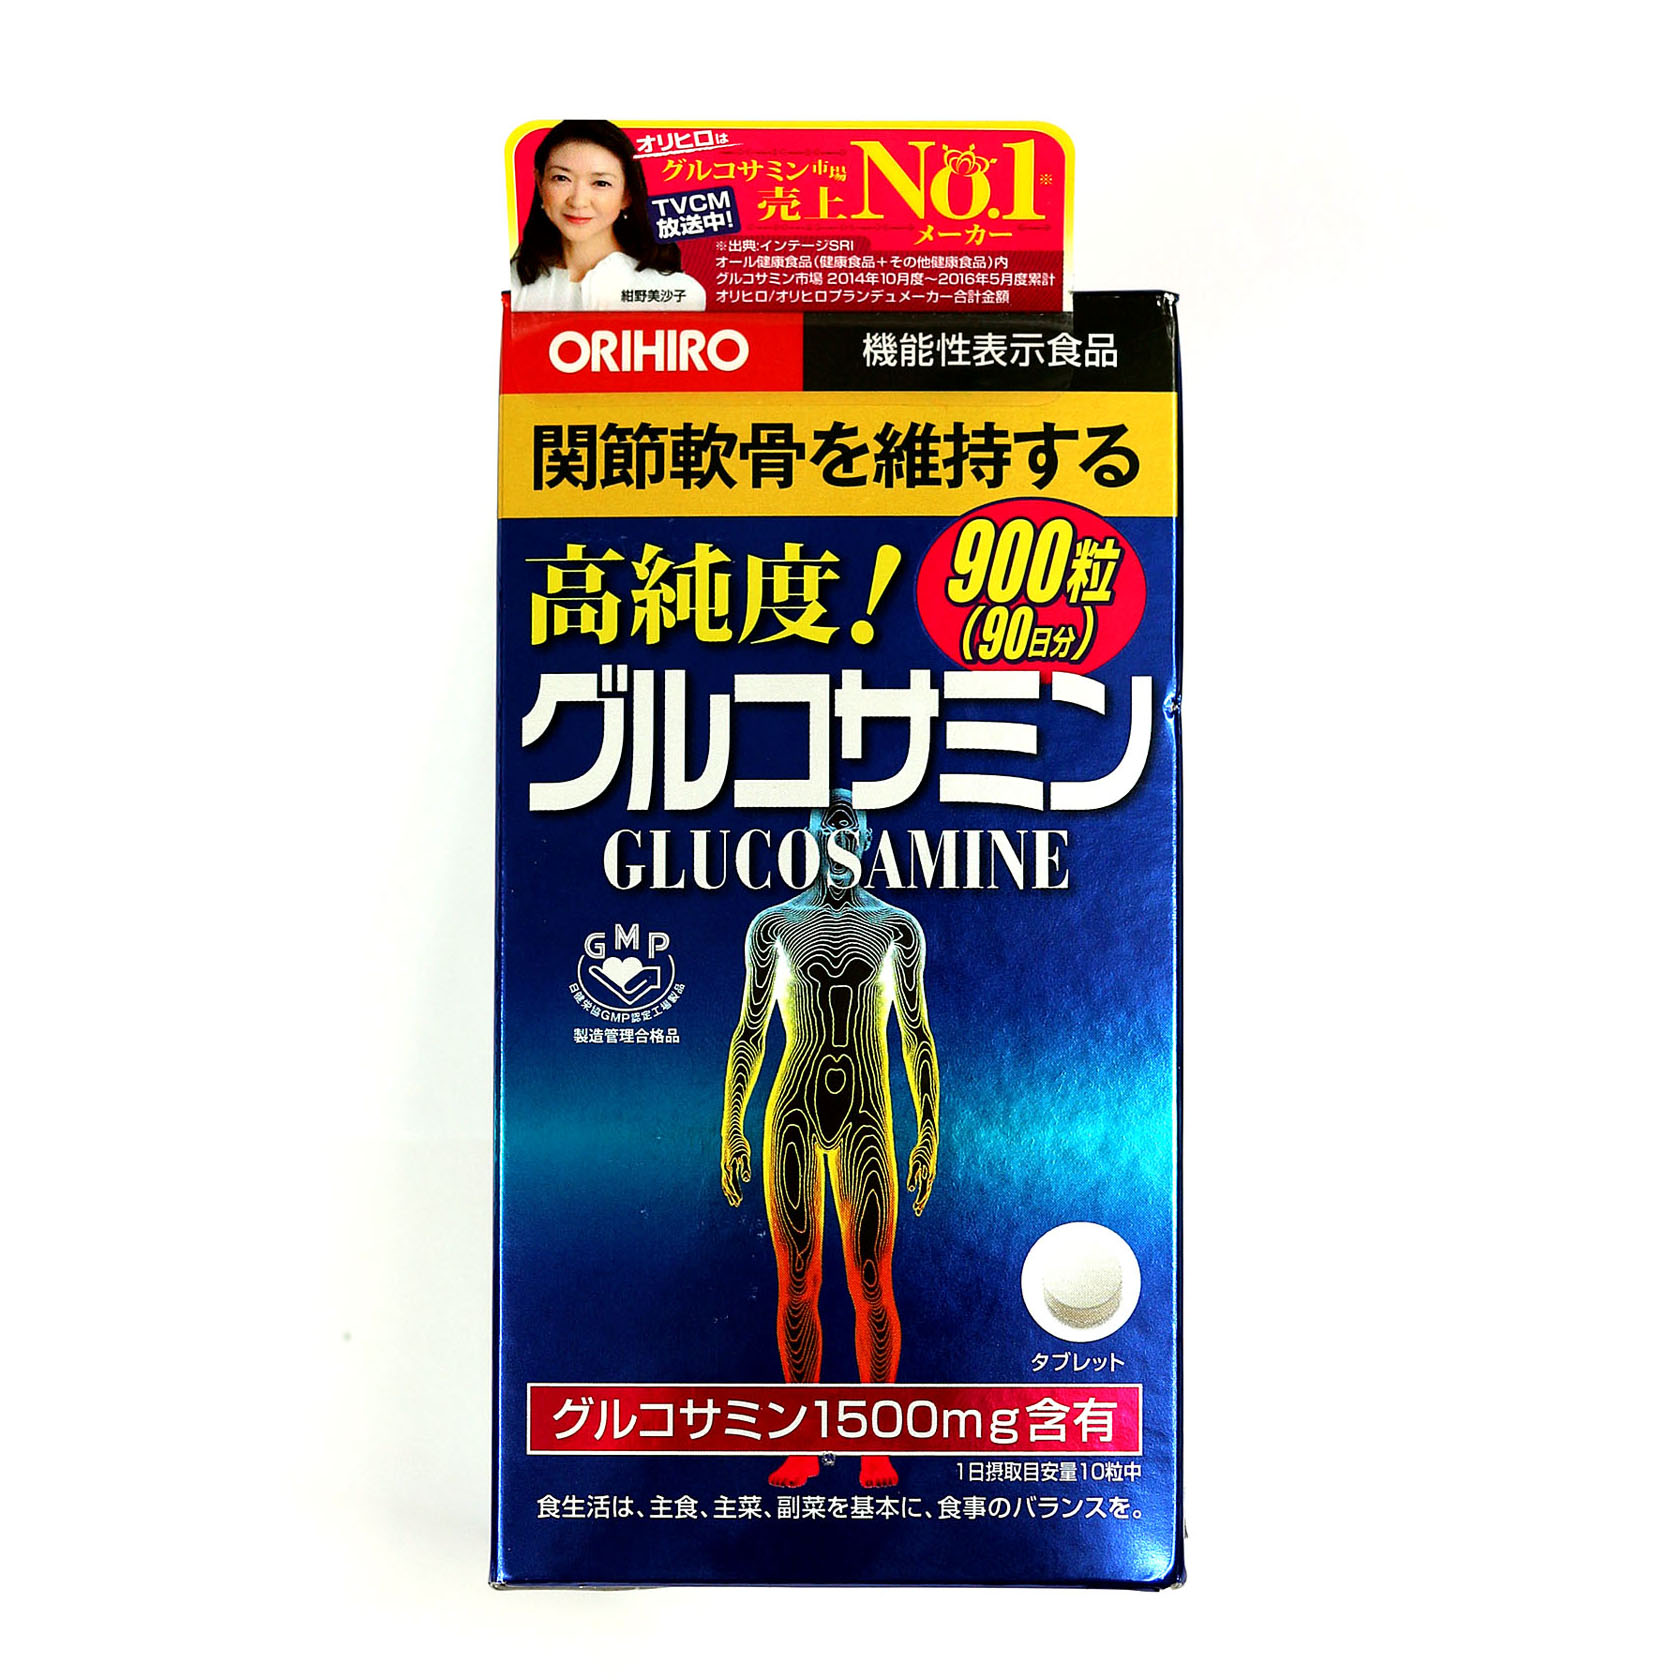 Viên uống Glucosamin Orihiro Nhật Bản (ORIHIRO Hight Pure Glucosamine Tablets)